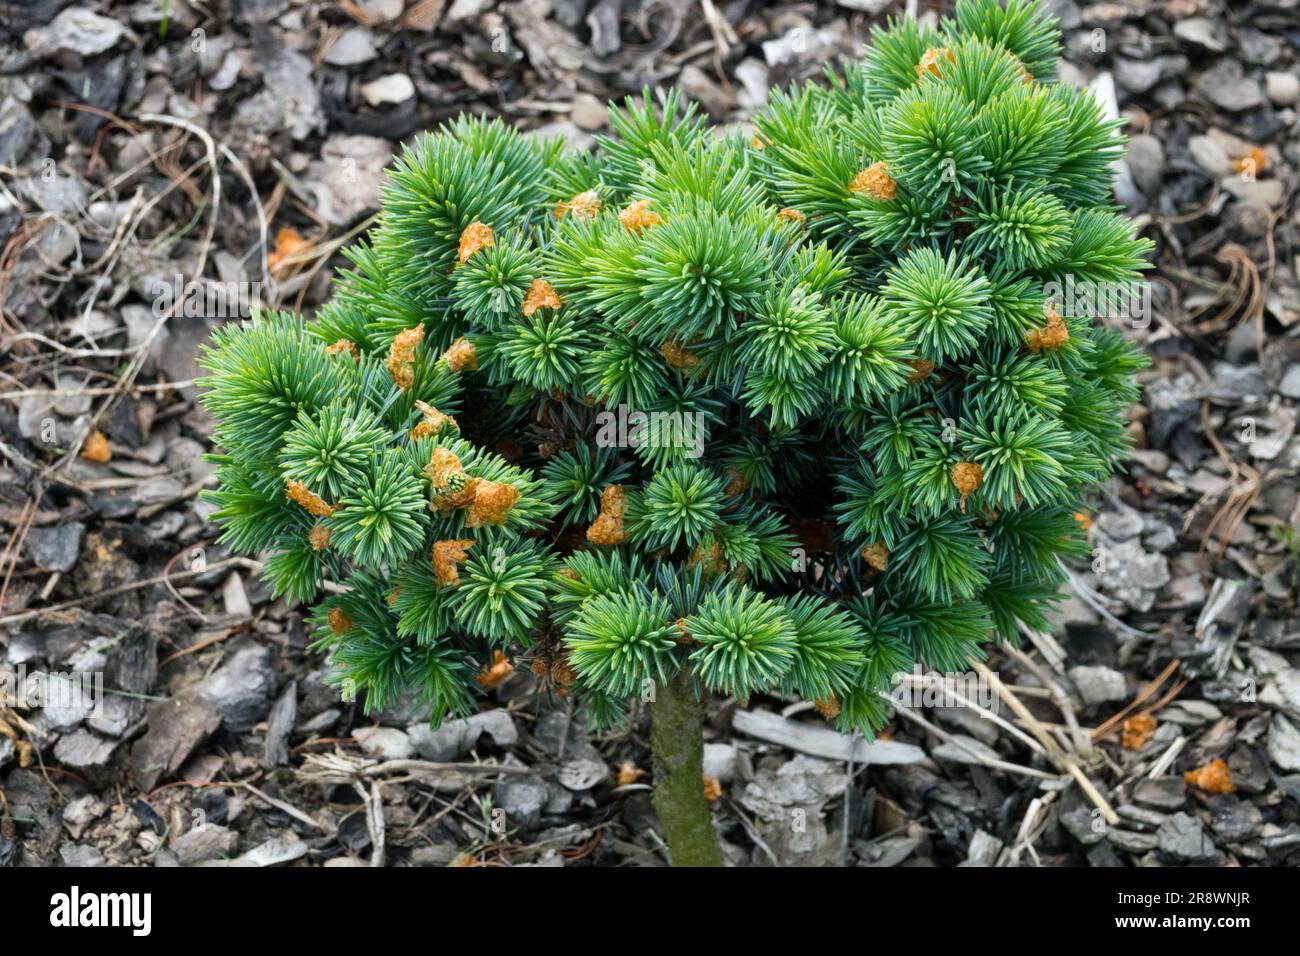 Dwarf, Tree, Compact, Conifer, Blue Spruce, Picea pungens, Slow growing, Coniferous, Cultivar, Spruce, Picea pungens "Jimi Morris" Stock Photo